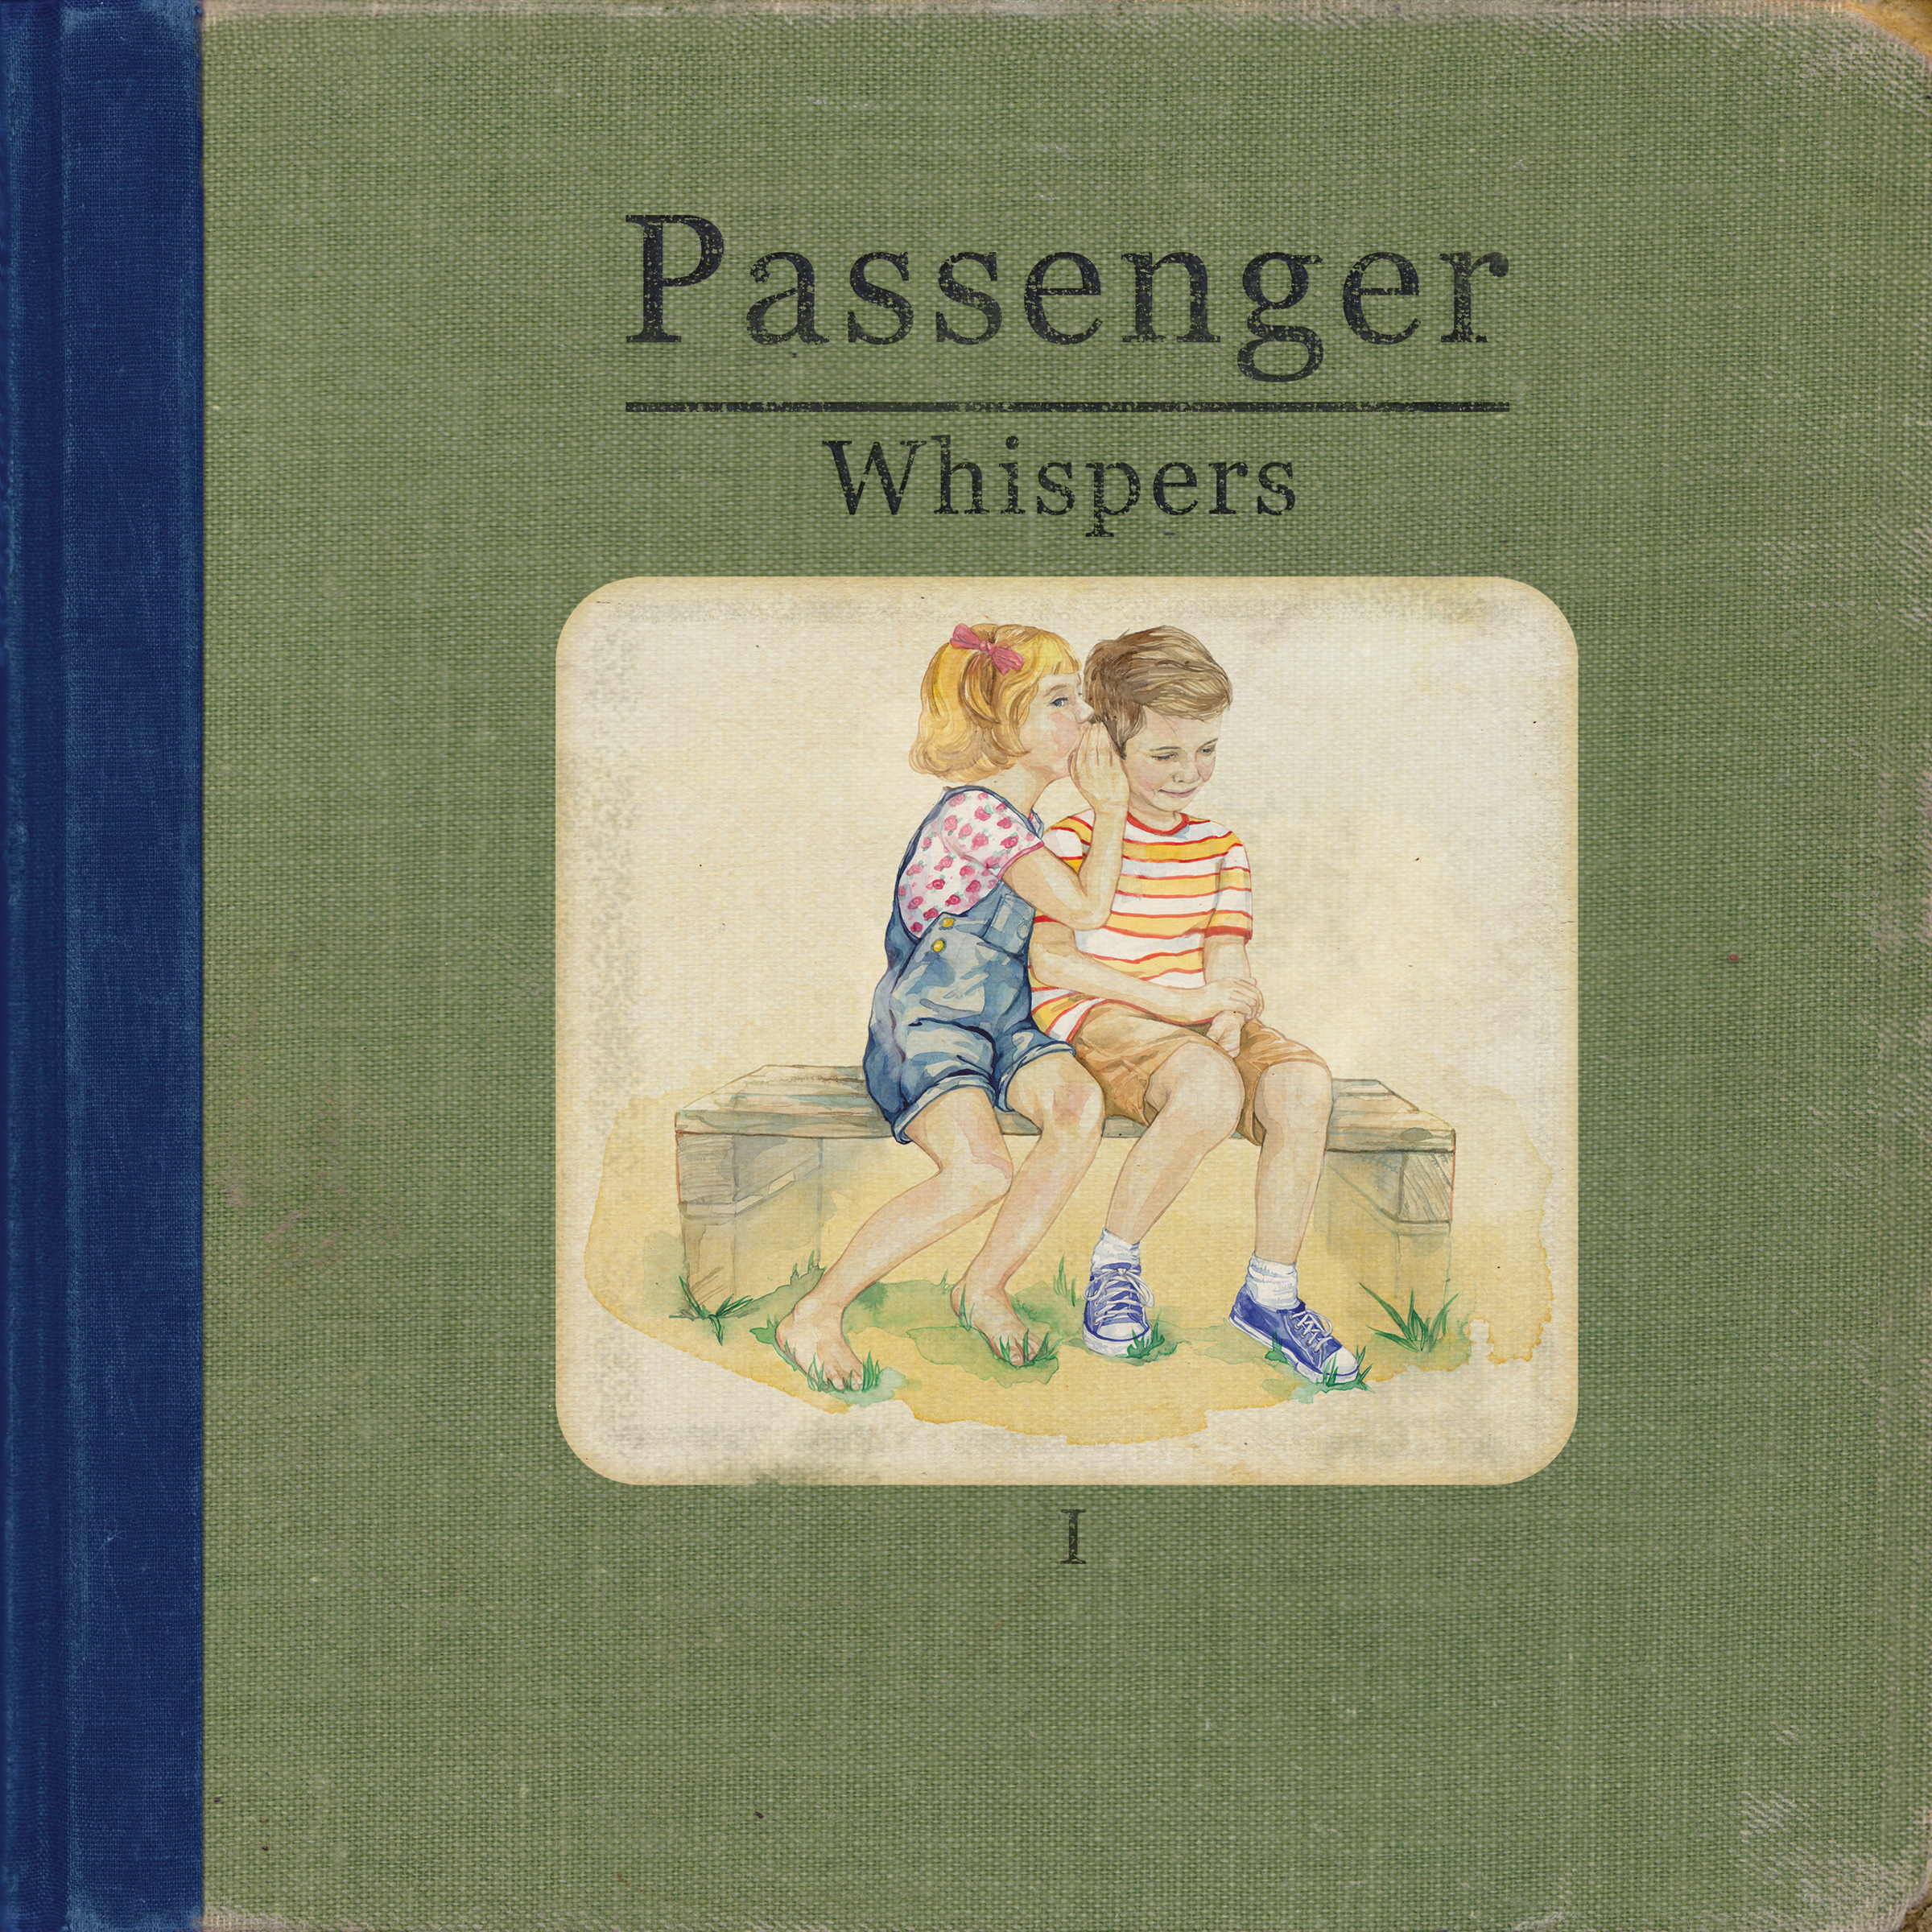 Passenger - Whispers (Deluxe Edition) - (CD)